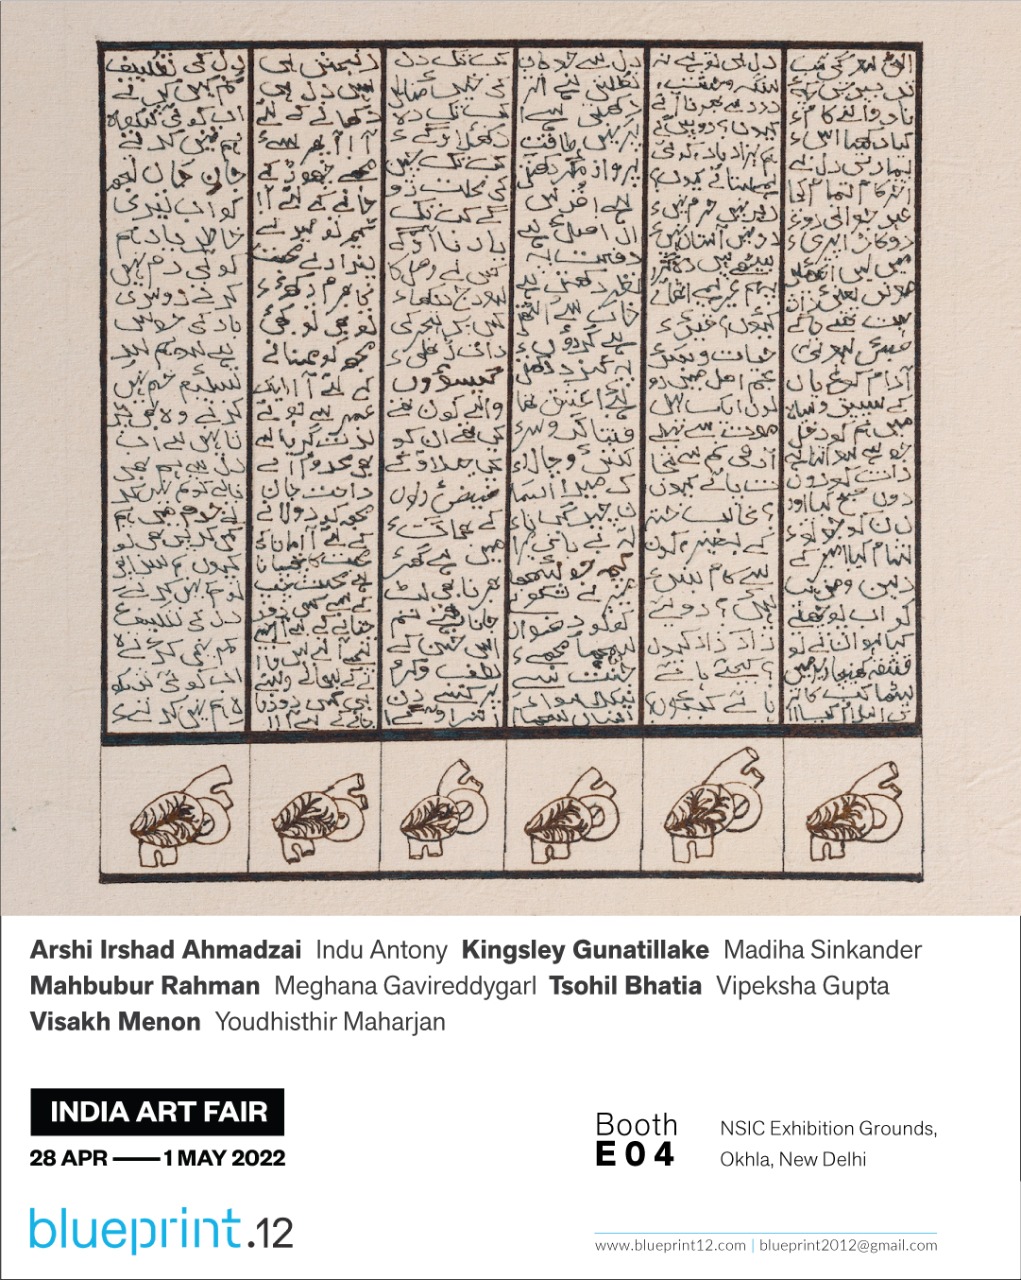 India Art Fair, South Asian Artists, Blueprint12